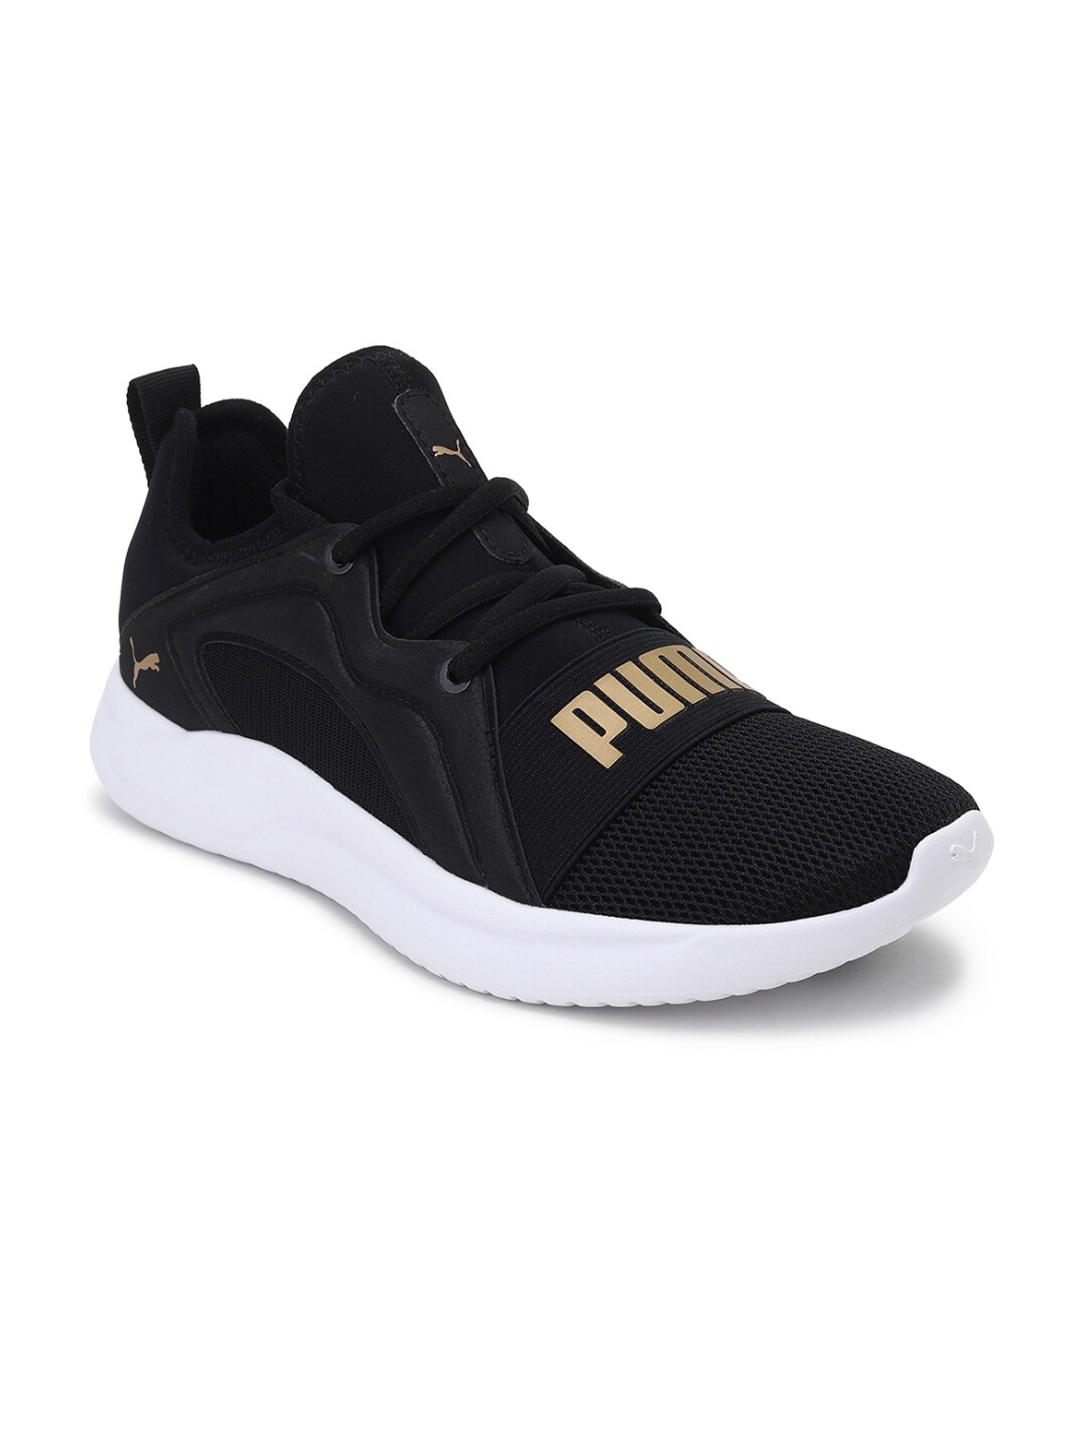 Buy Puma Women Black Resolve Street Mesh Running Shoes - Sports Shoes ...